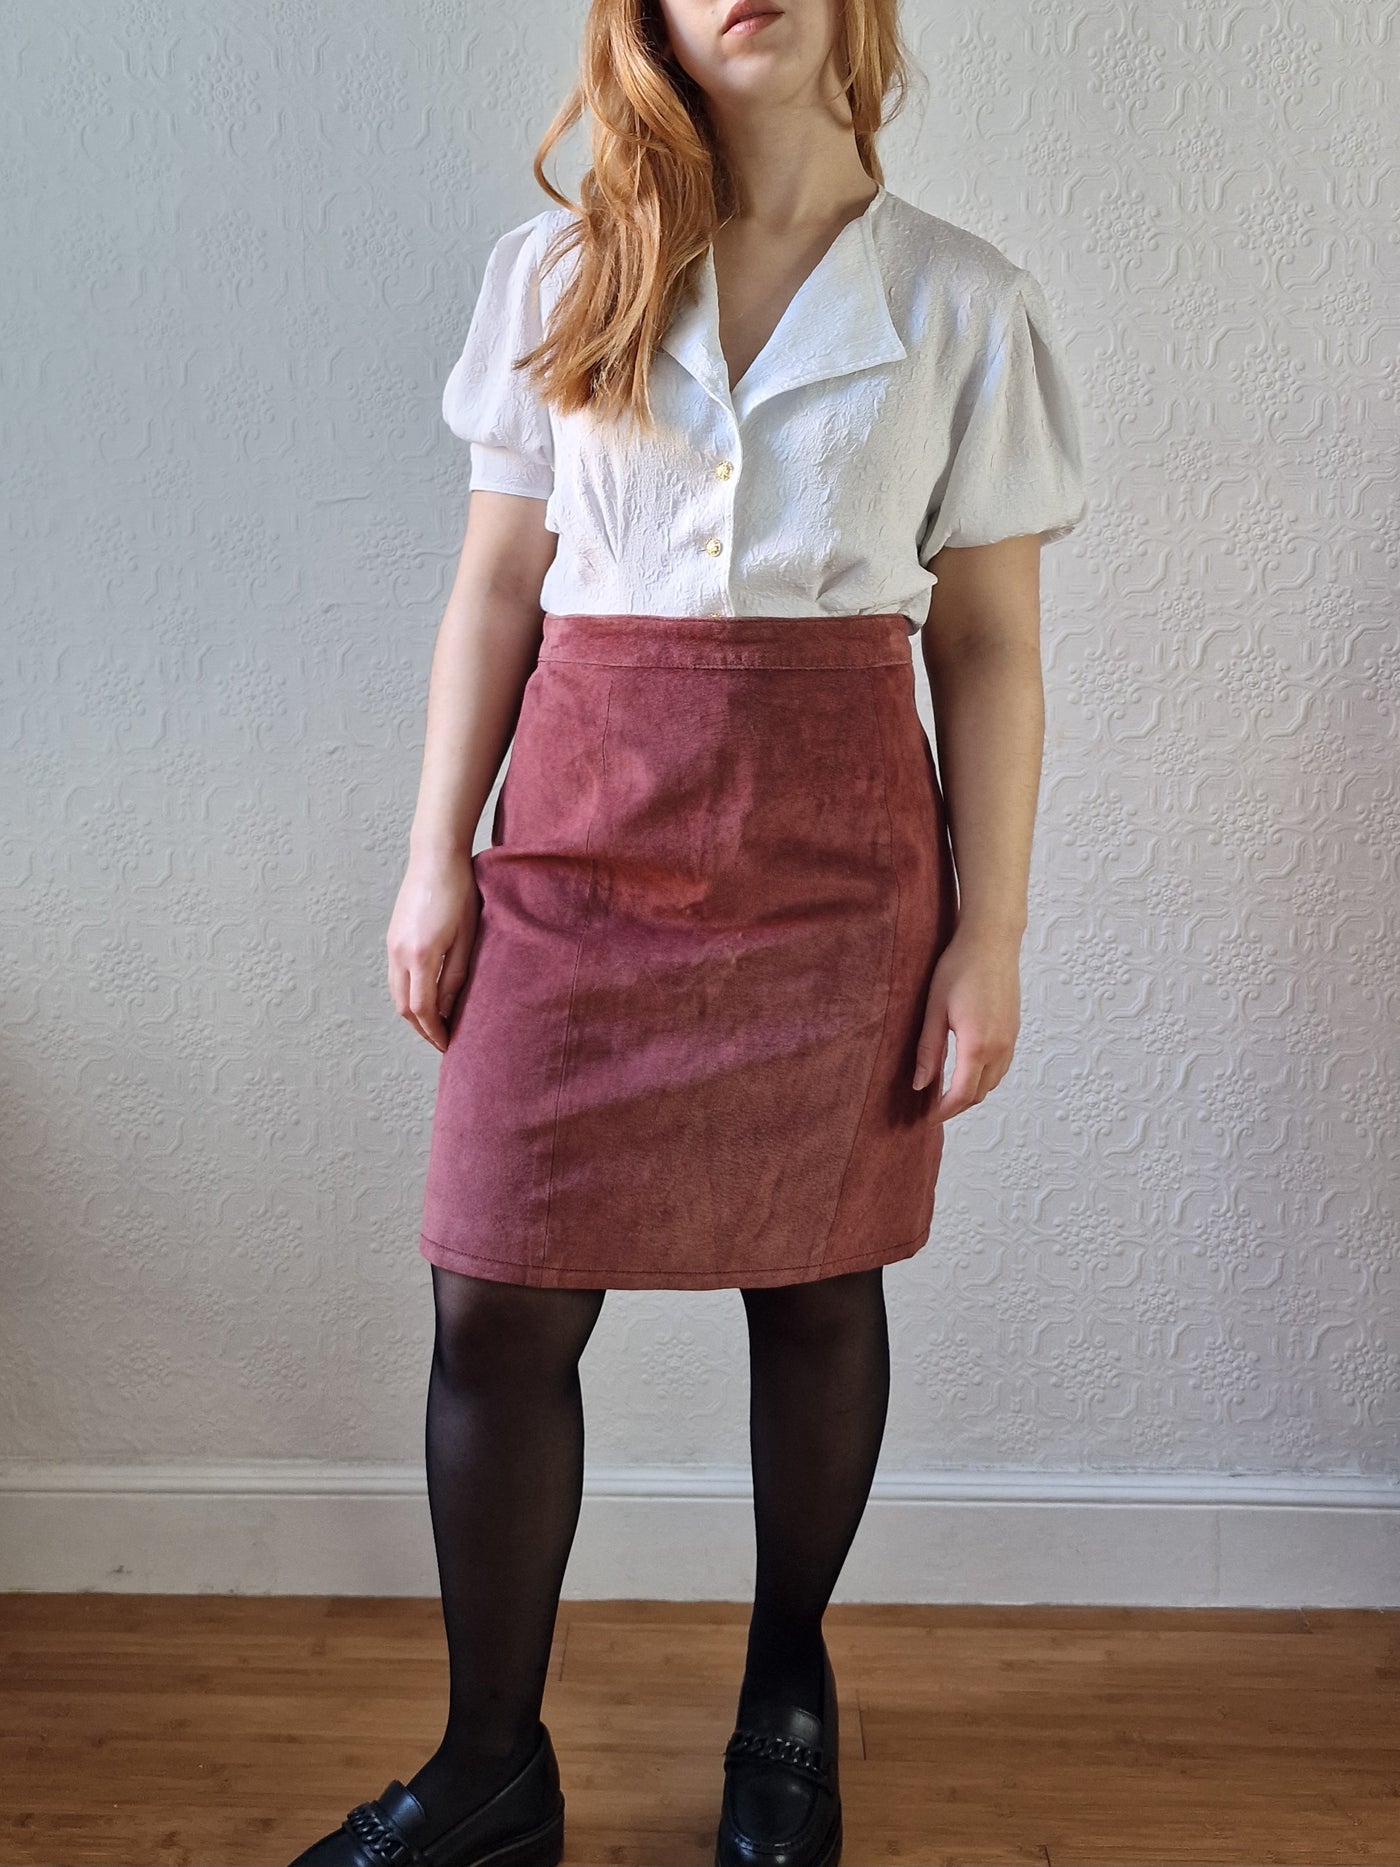 Vintage Plum 100% Genuine Leather Suede Skirt - M